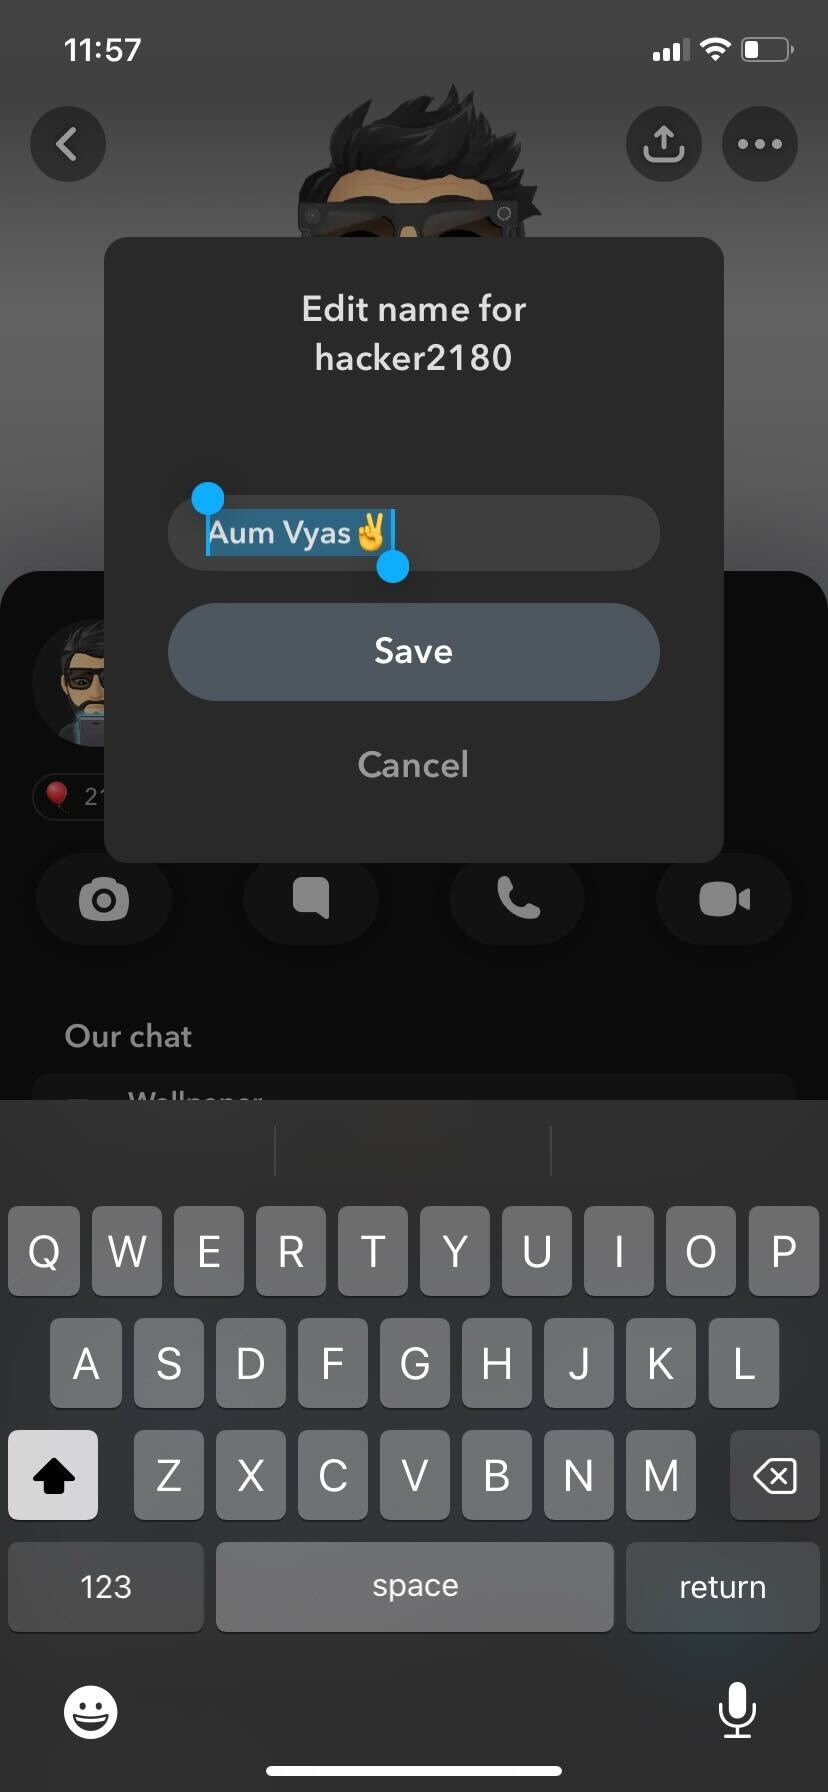 Snapchat edit friend's Display Name